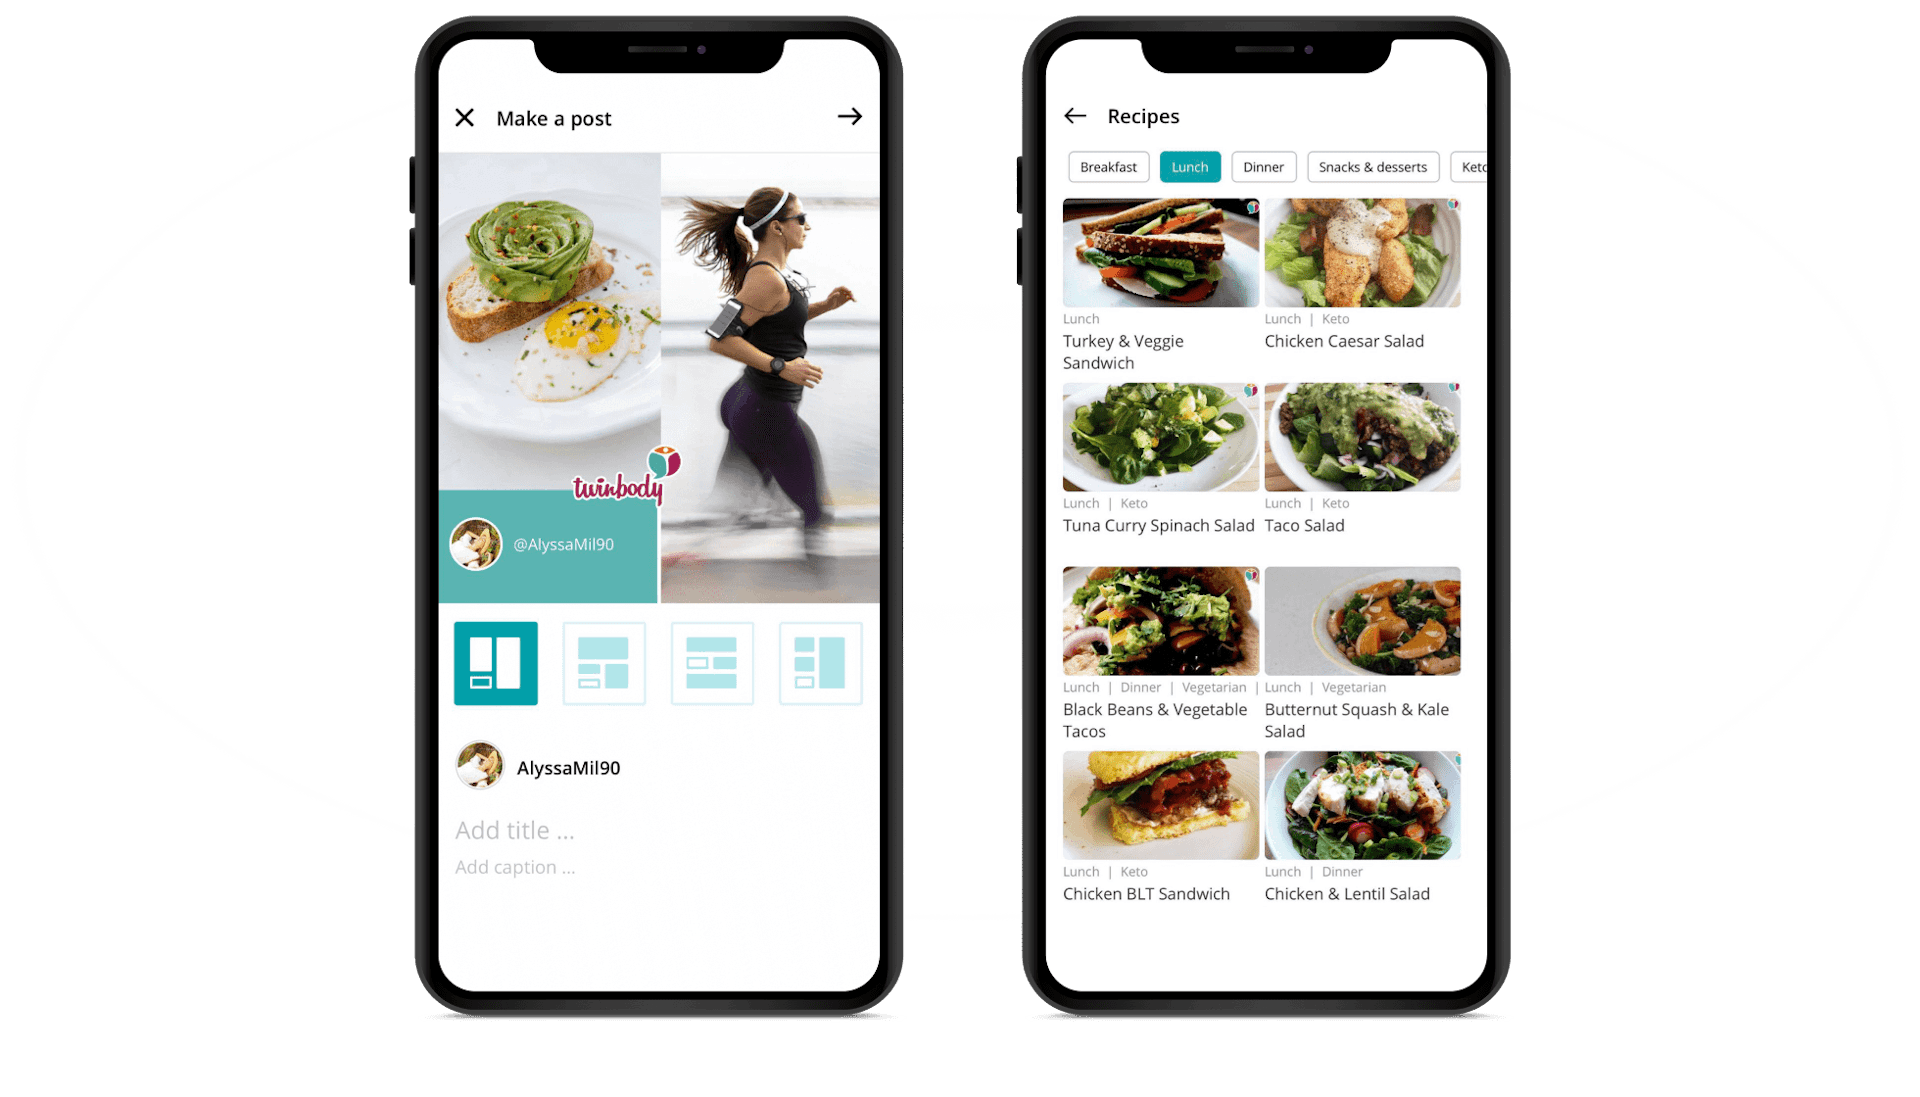 Twinbody: Health & fitness app